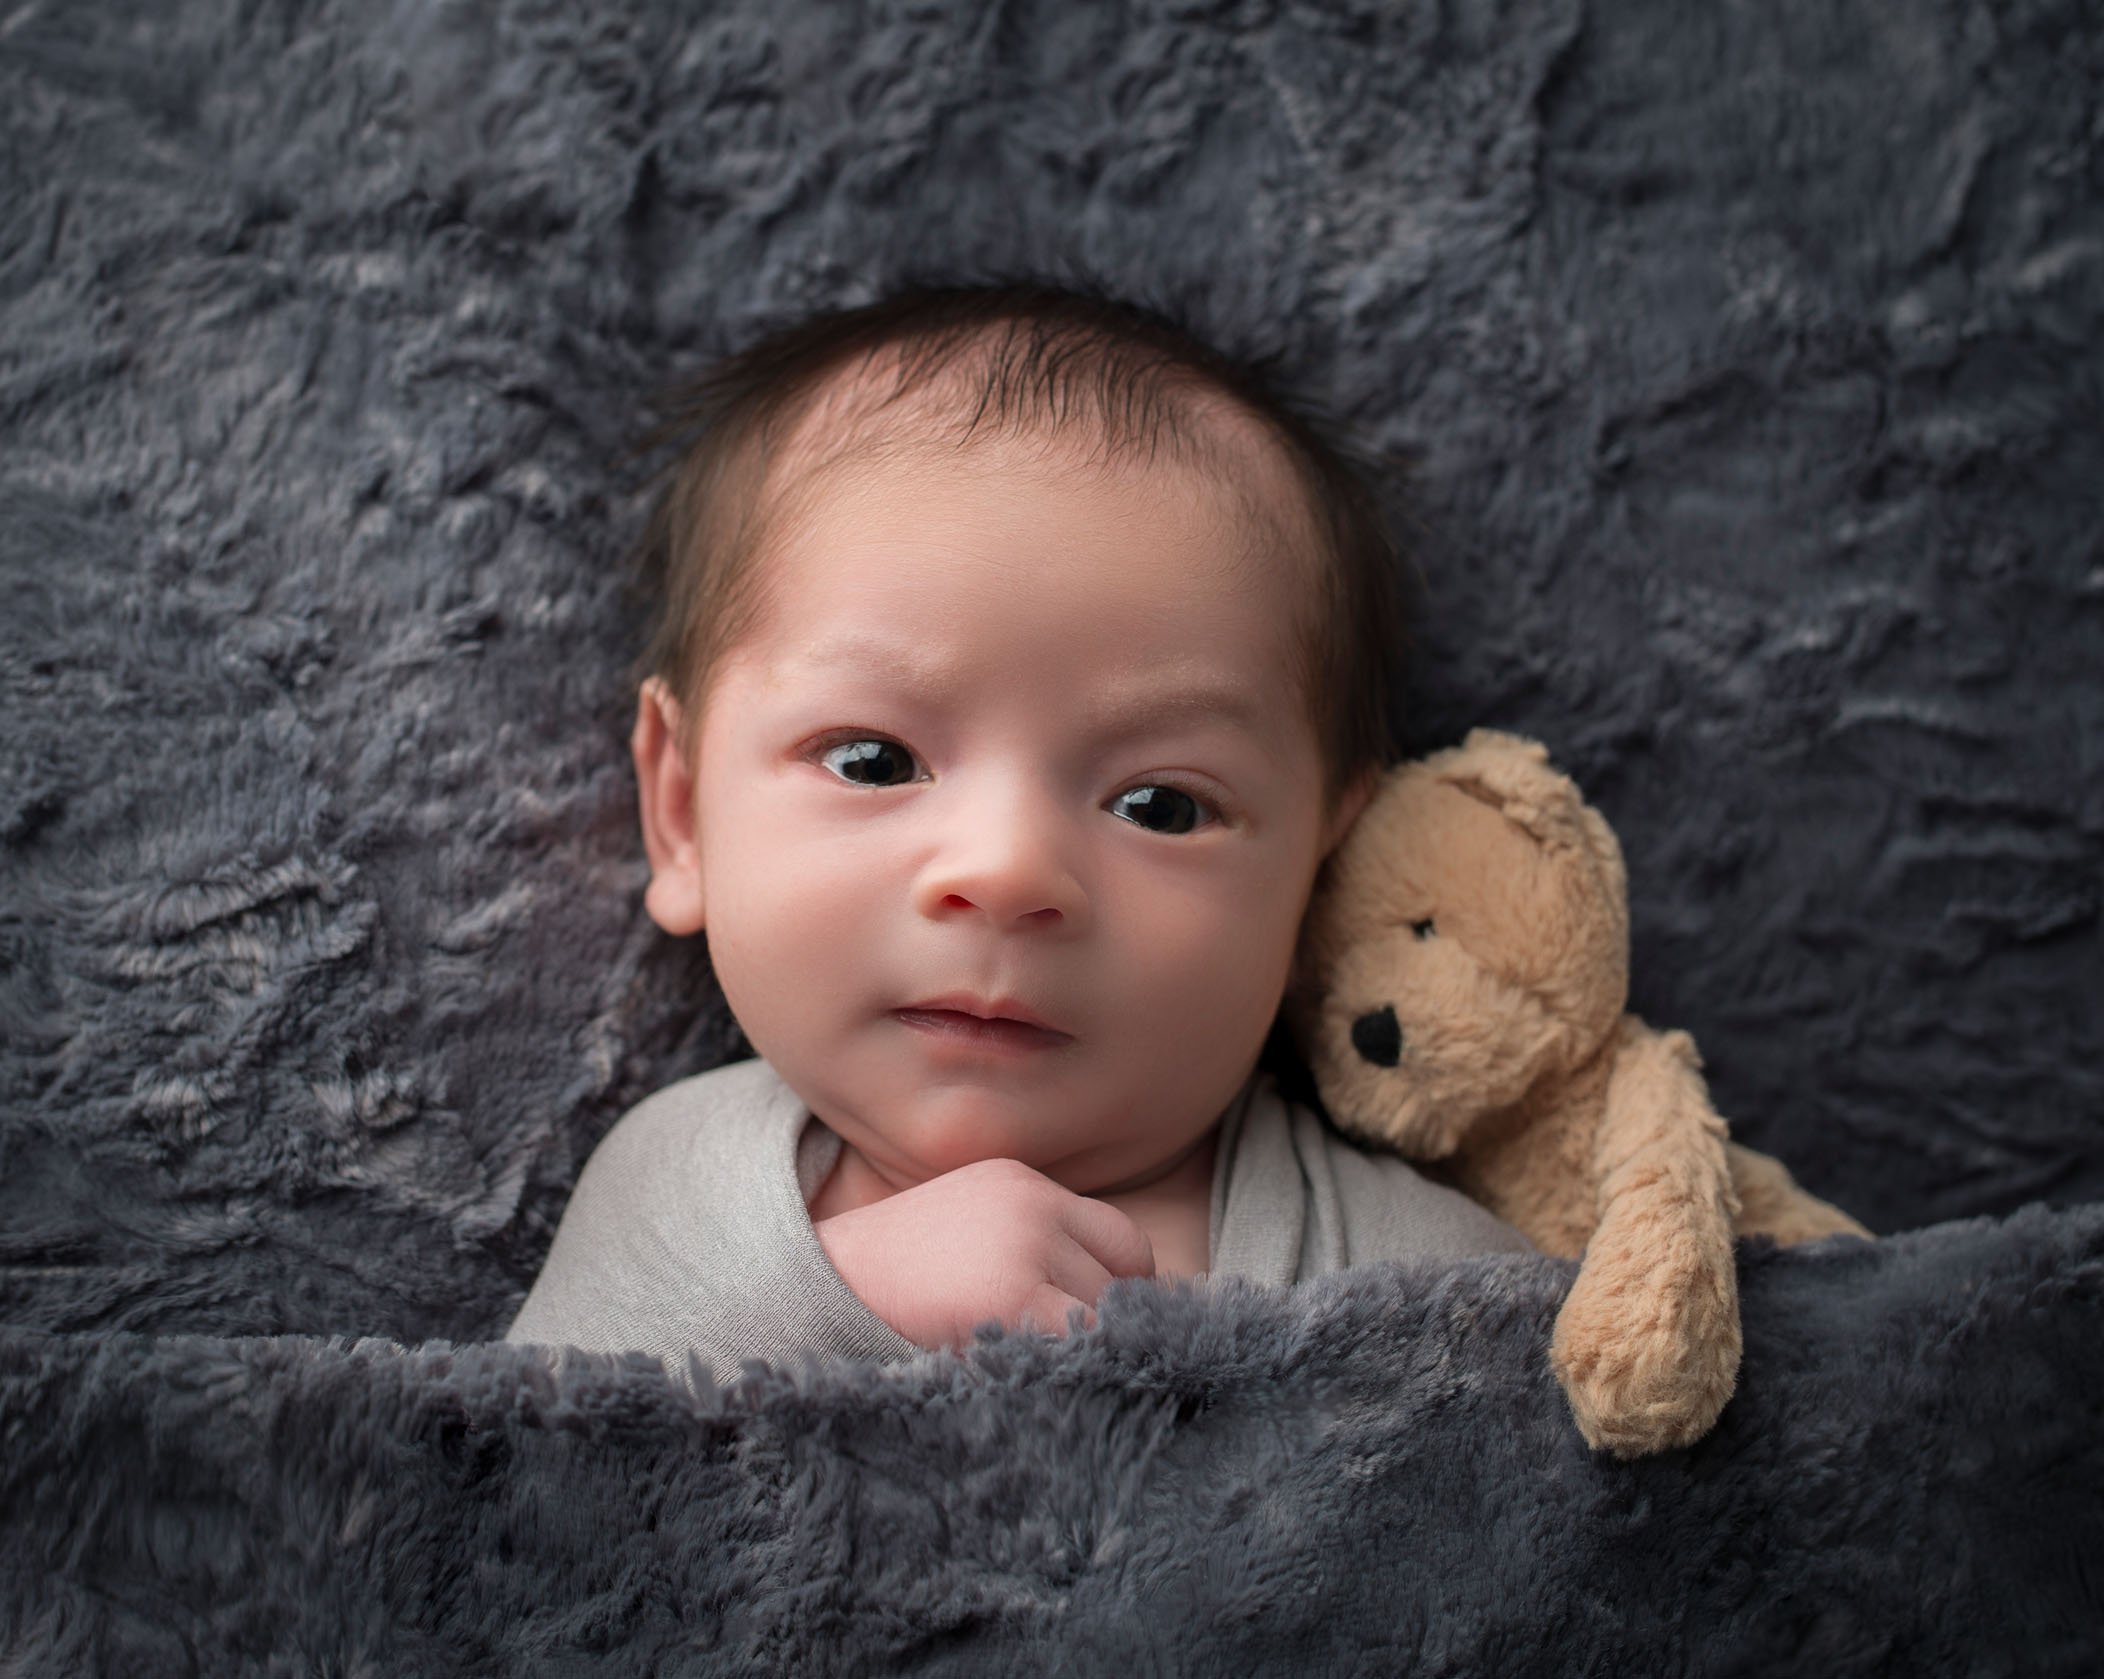 newborn baby boy awake with teddy bear